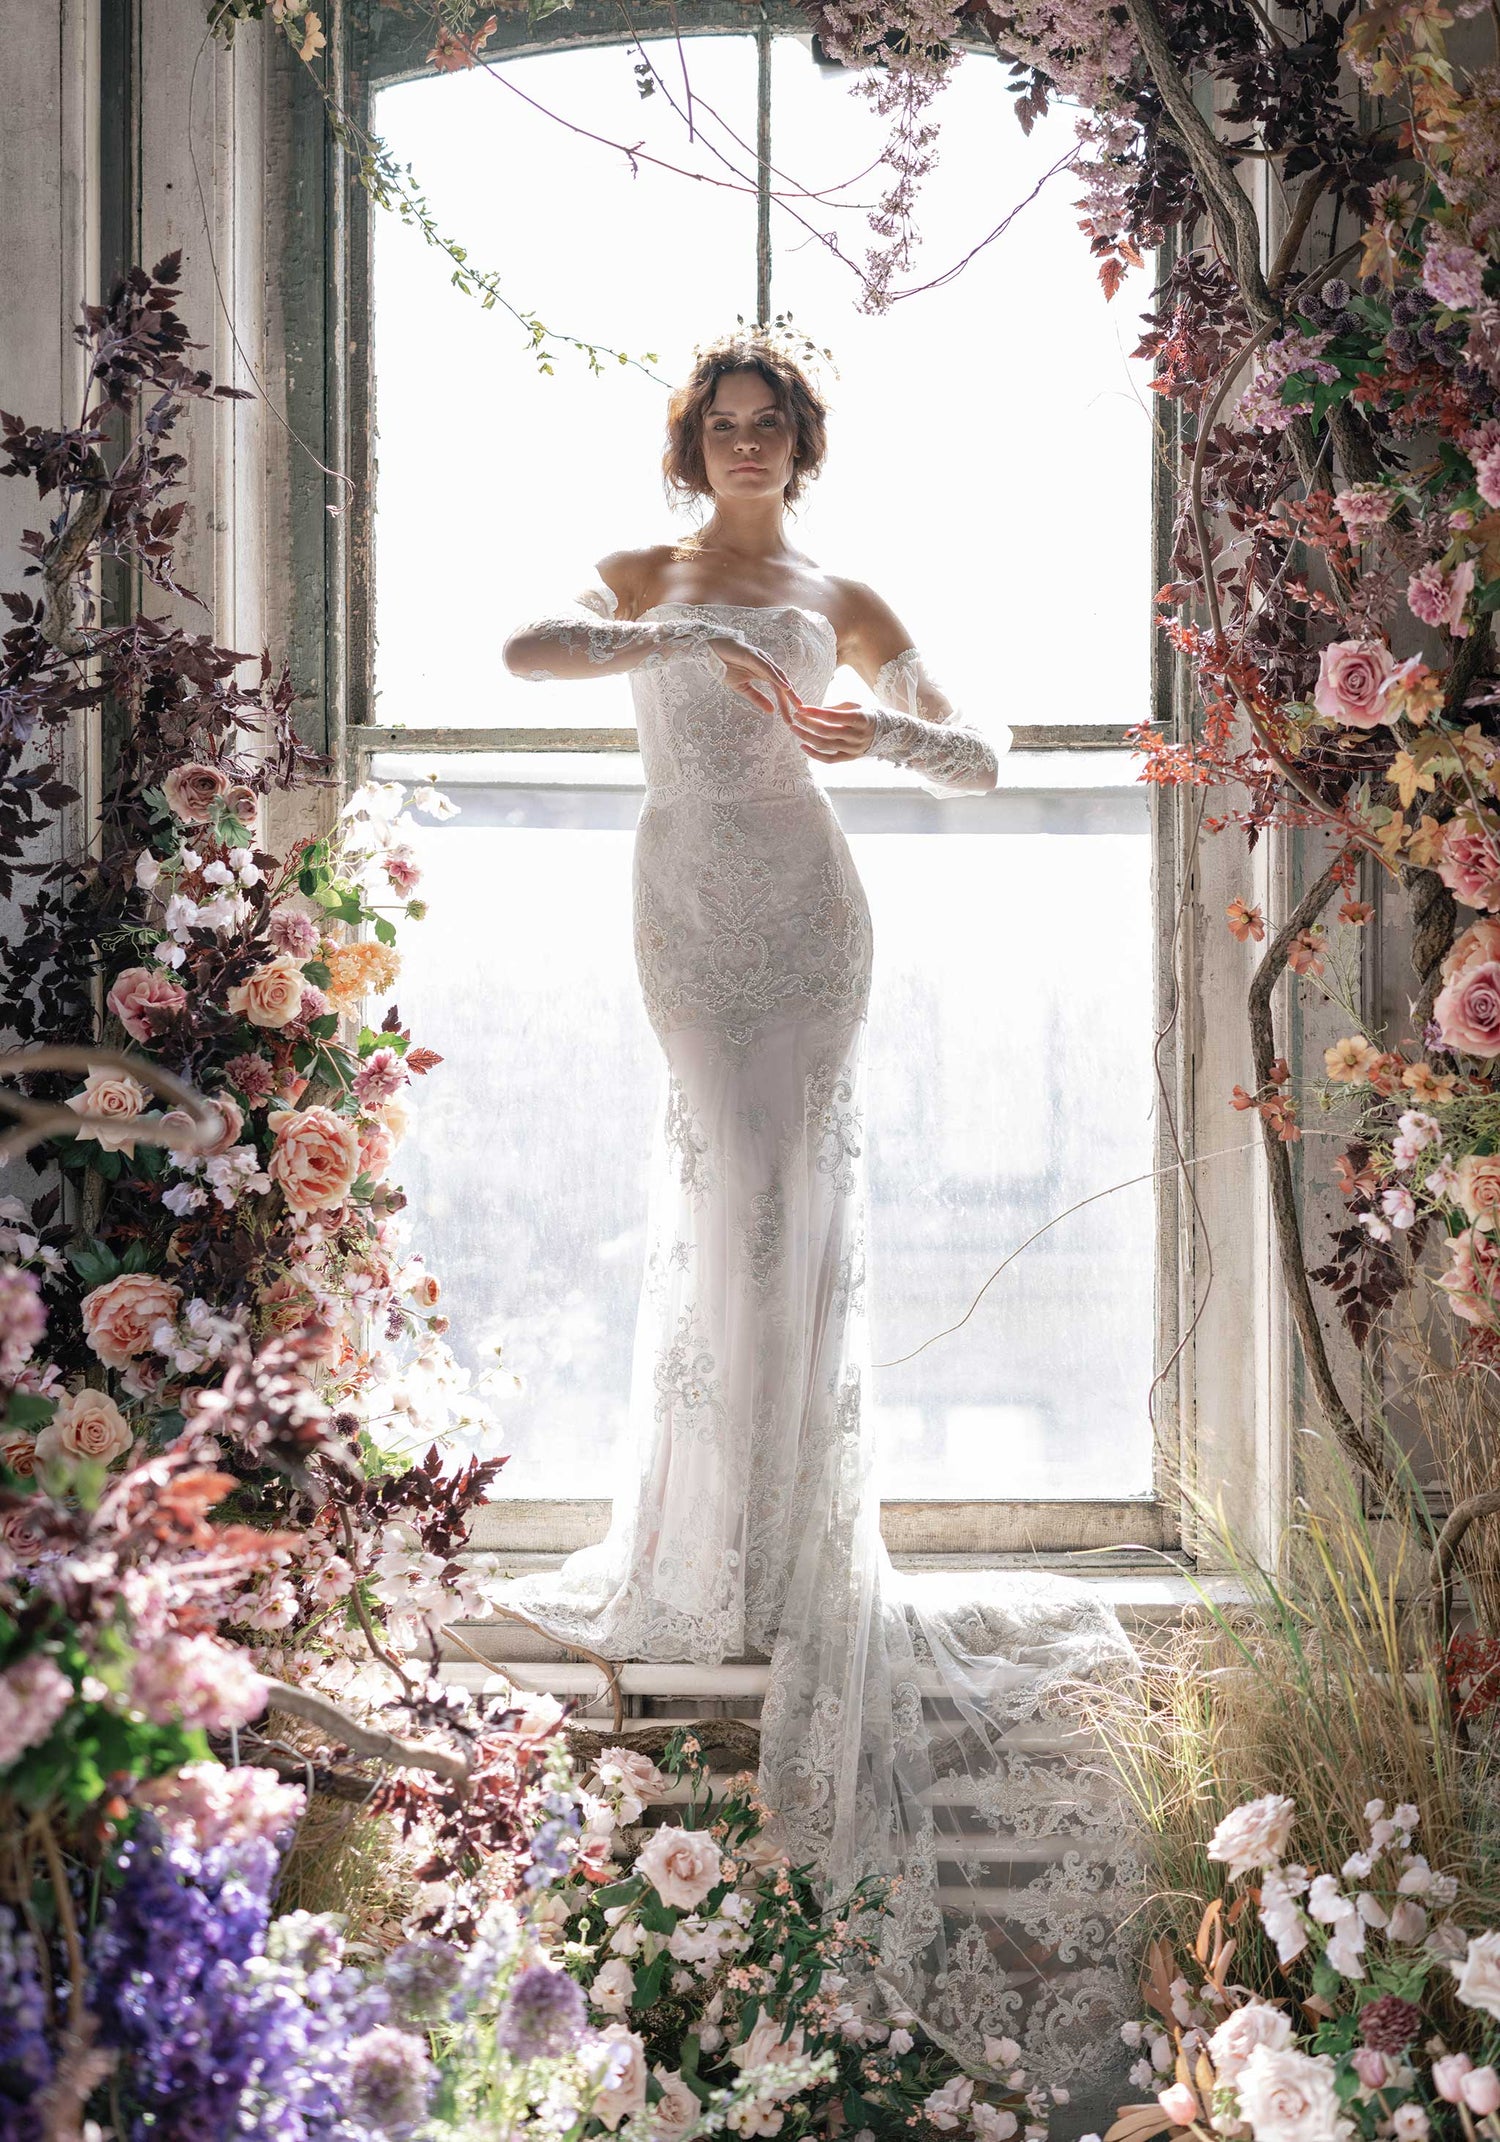 Model in Aquamarine mermaid style wedding dress surround by wedding floral decorations